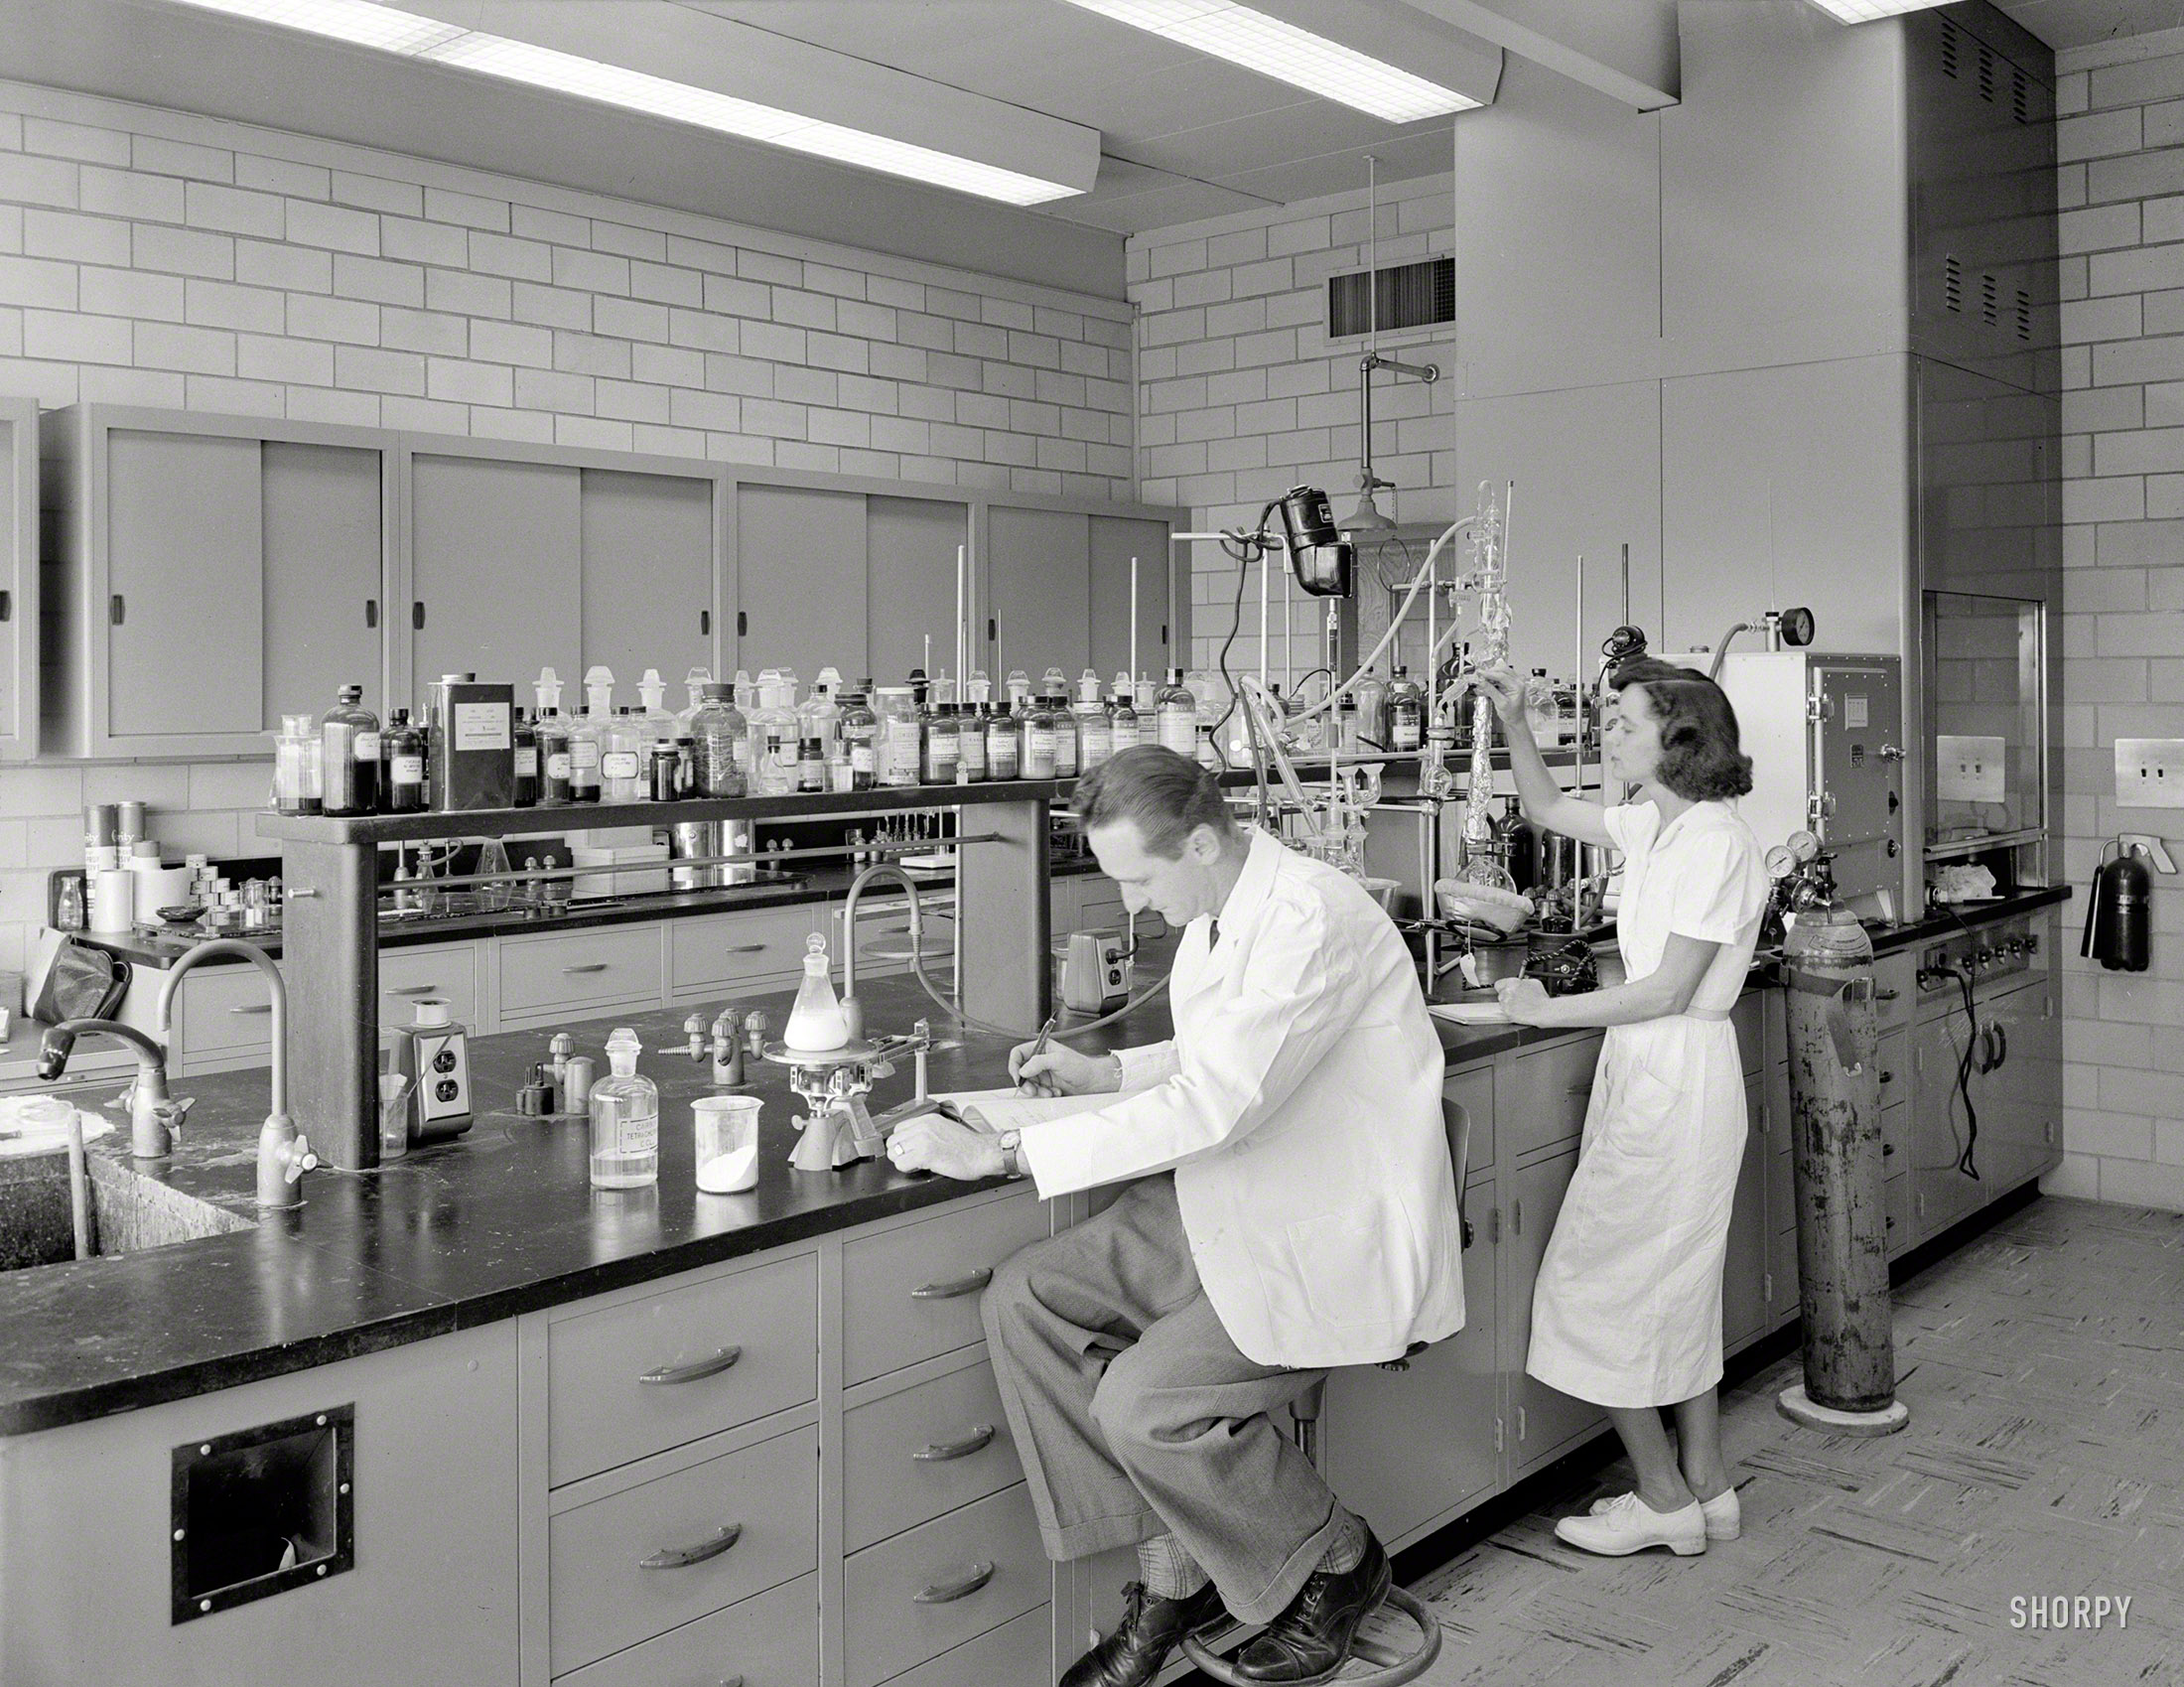 May 15, 1951. "Johnson & Johnson Research Center, New Brunswick, New Jersey. Organic laboratory." Gottscho-Schleisner photo. View full size.